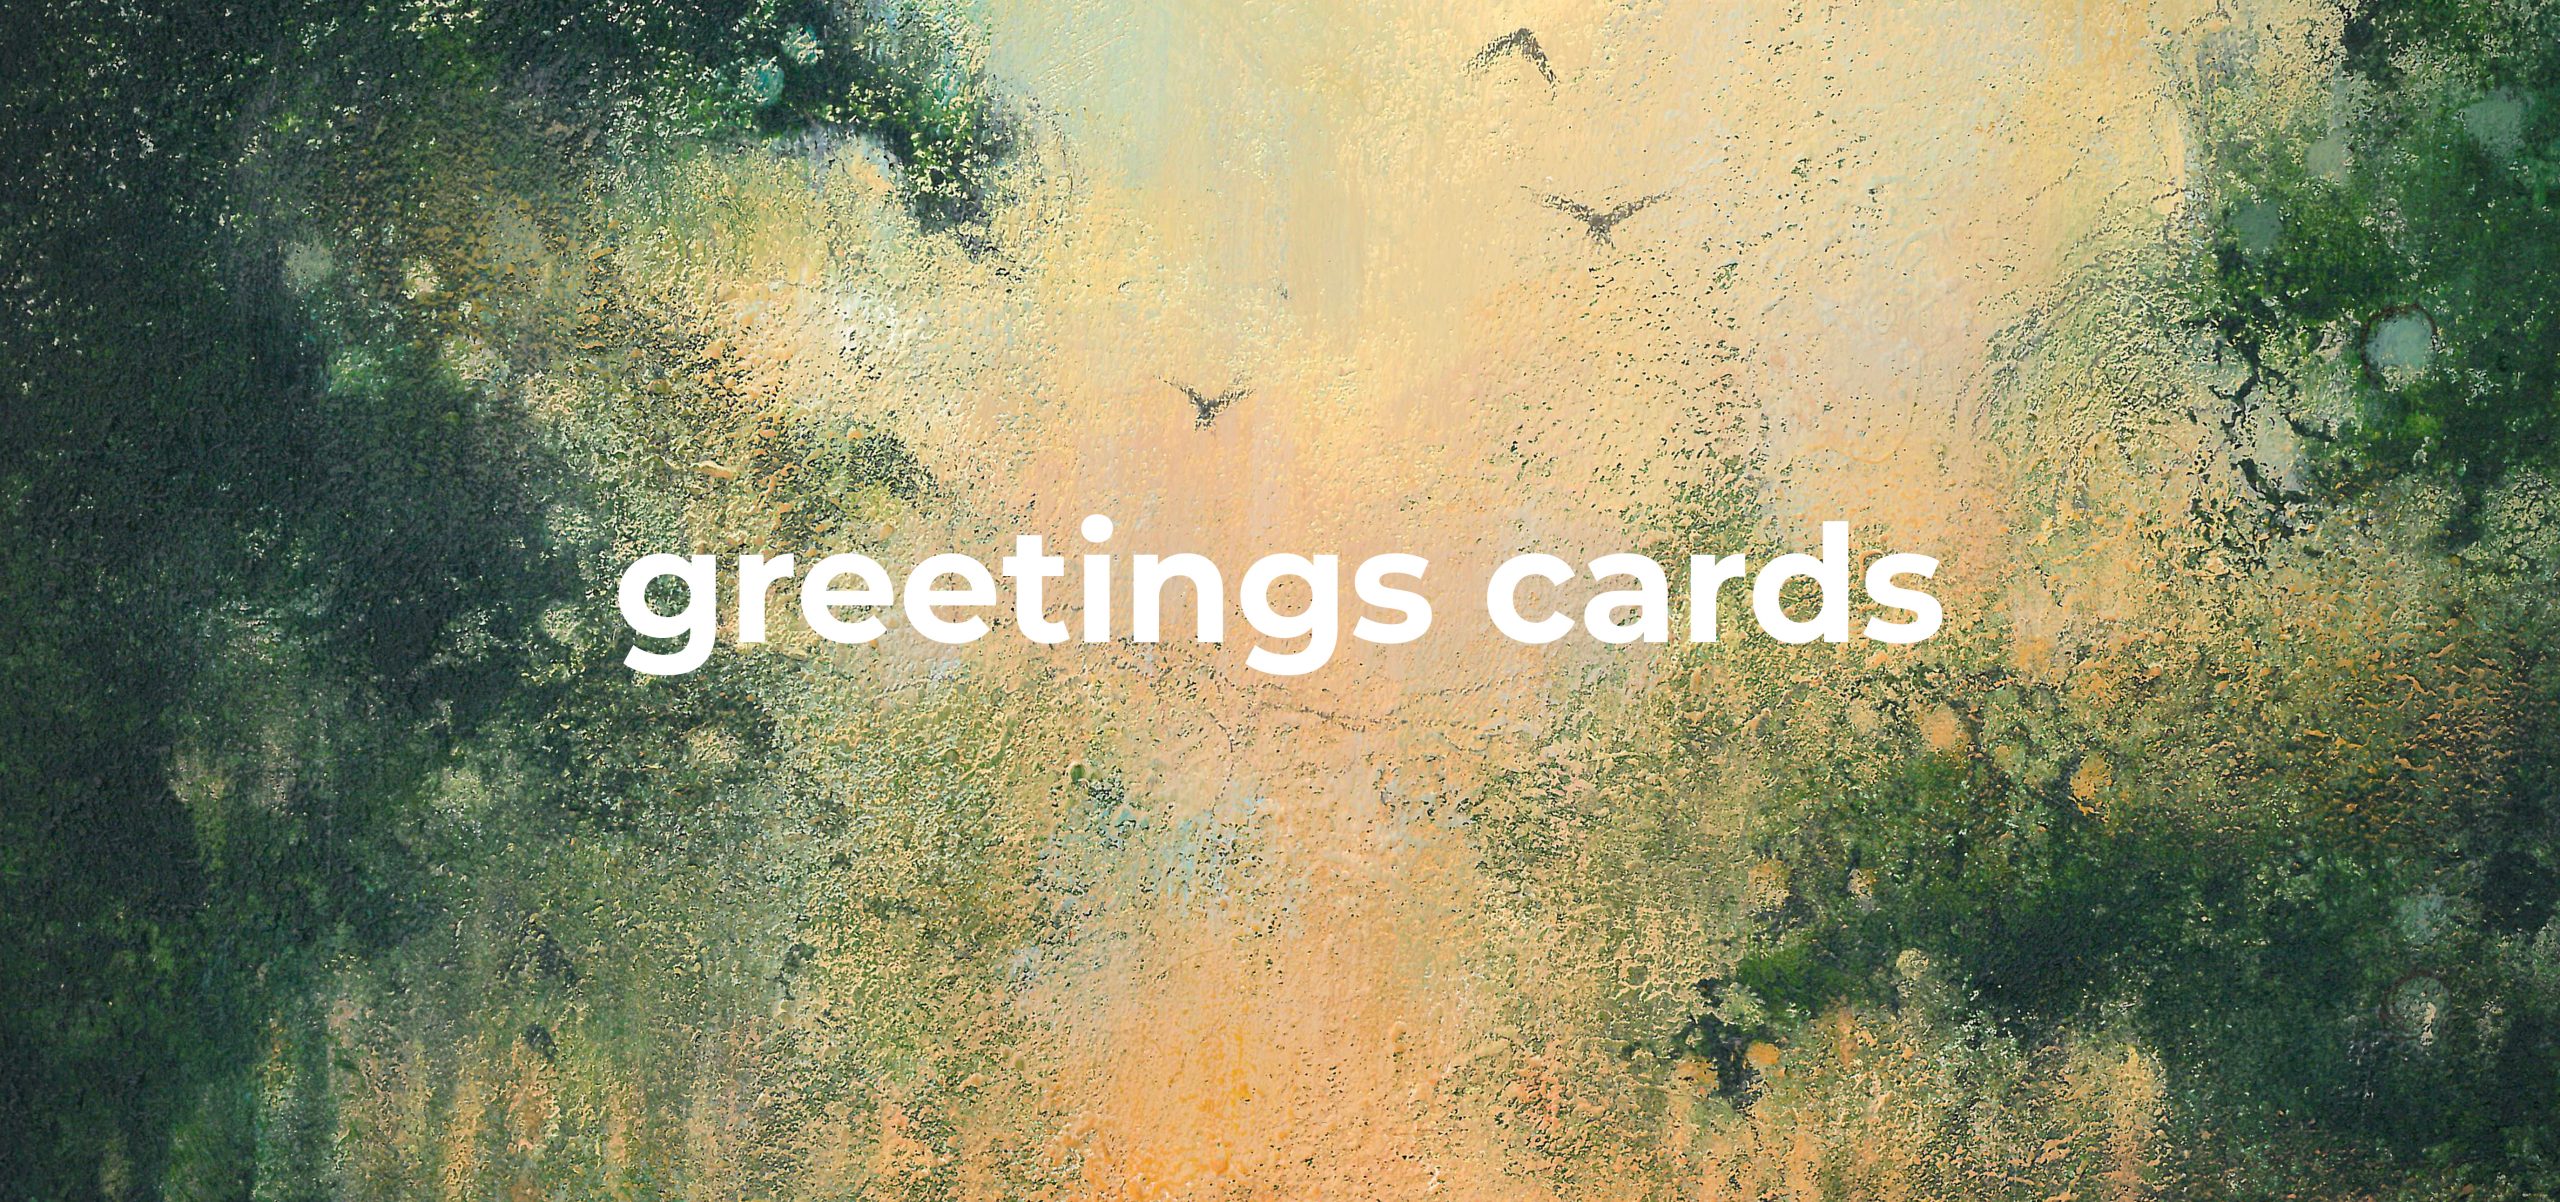 Greetings Cards header image